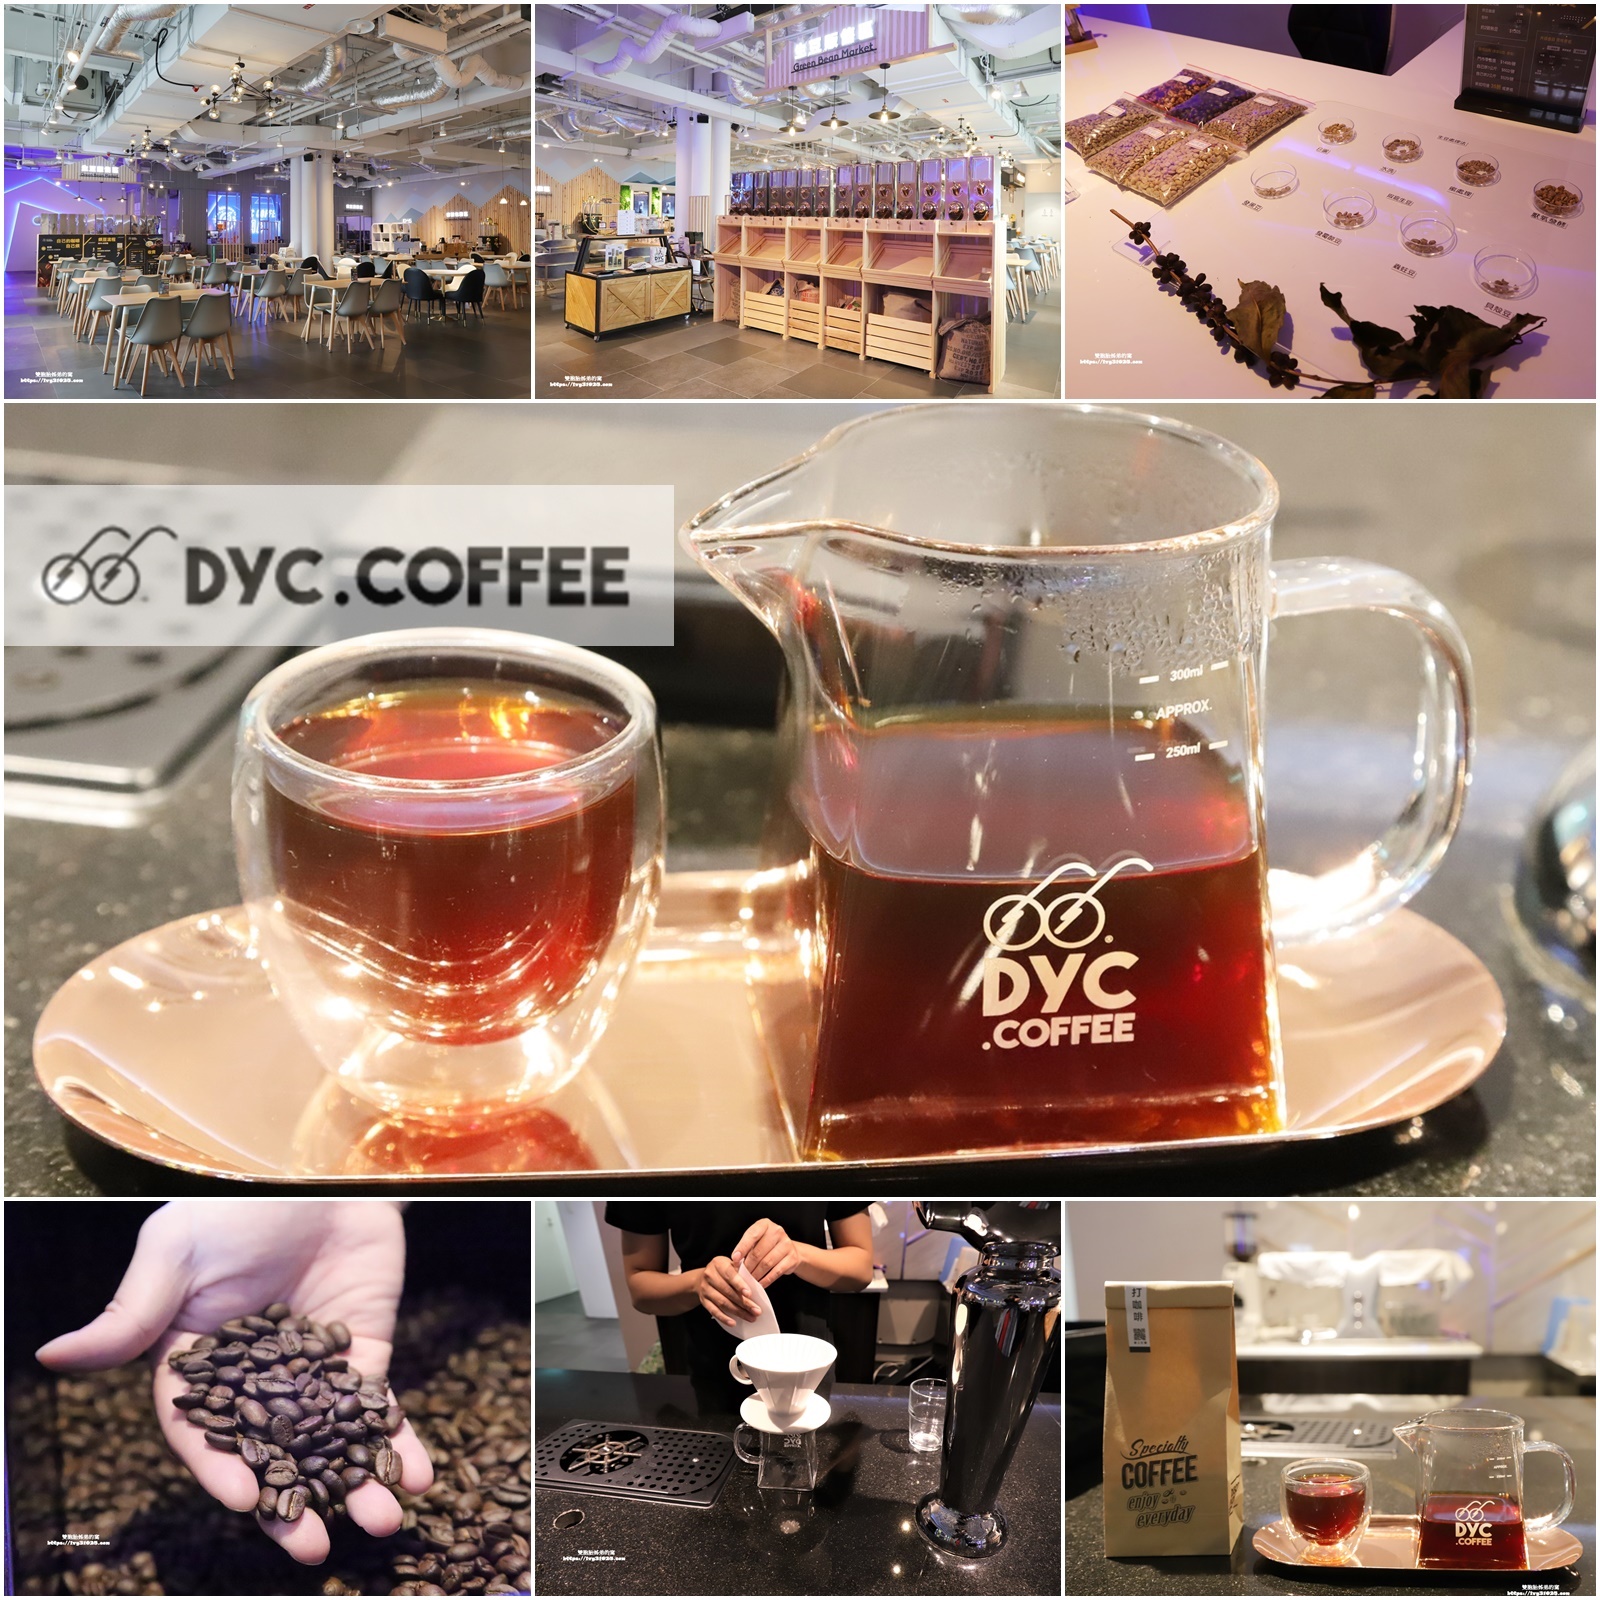 DYC.COFFEE打咖啡實驗室 量身客製科技化烘培 & 書香 X 咖啡香一起感受